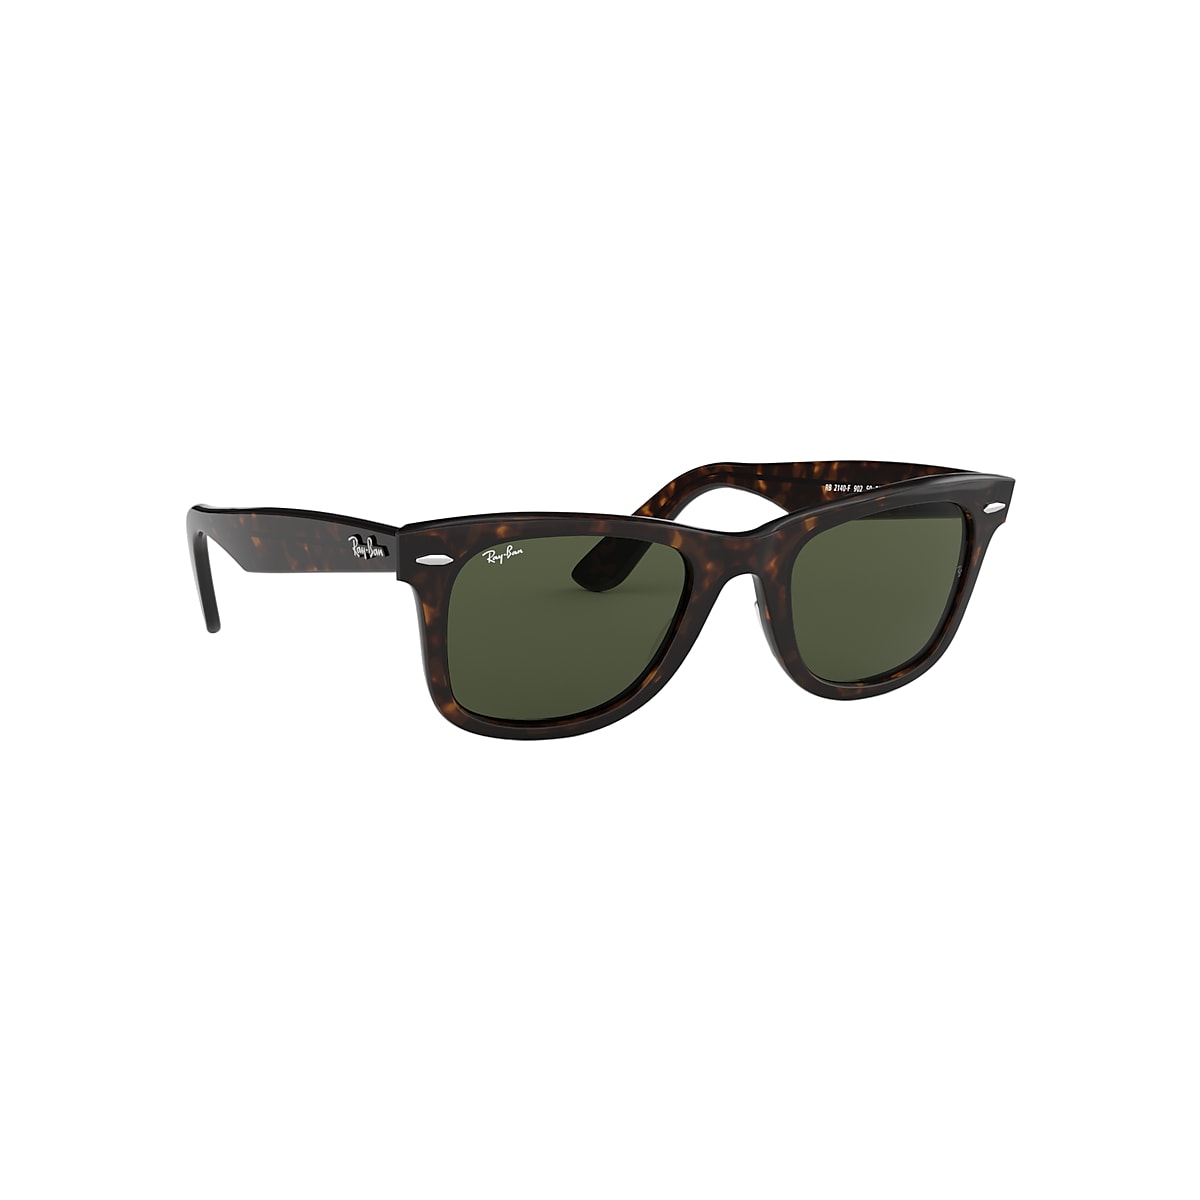 ORIGINAL WAYFARER CLASSIC Sunglasses in Tortoise and Green 